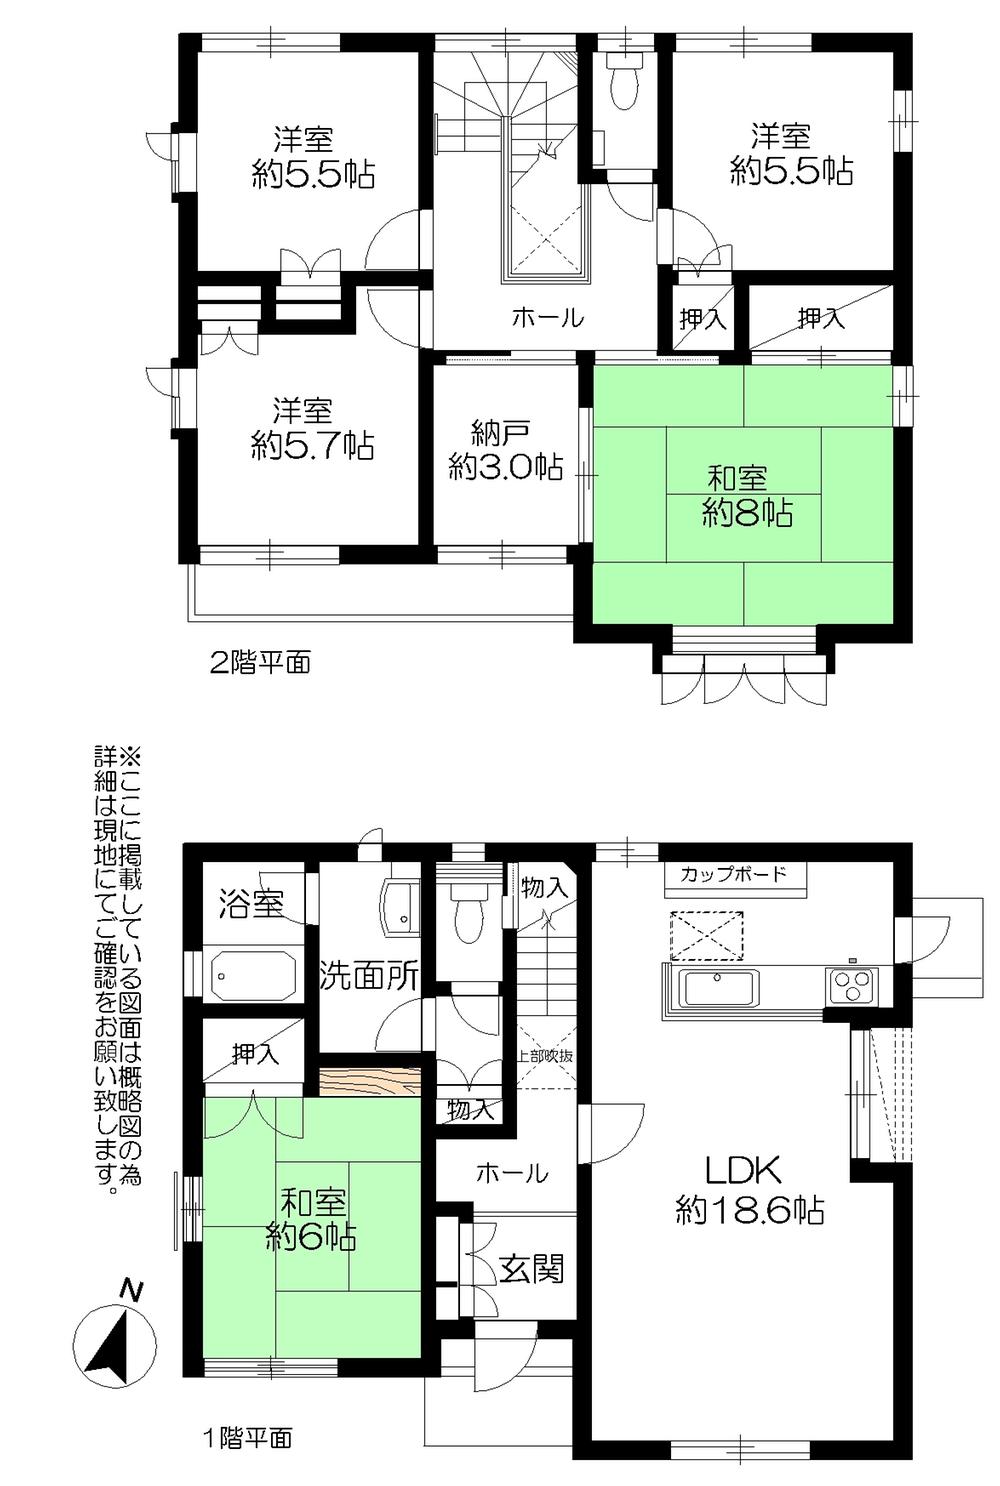 Floor plan. 23.8 million yen, 5LDK + S (storeroom), Land area 214.55 sq m , Building area 124.84 sq m